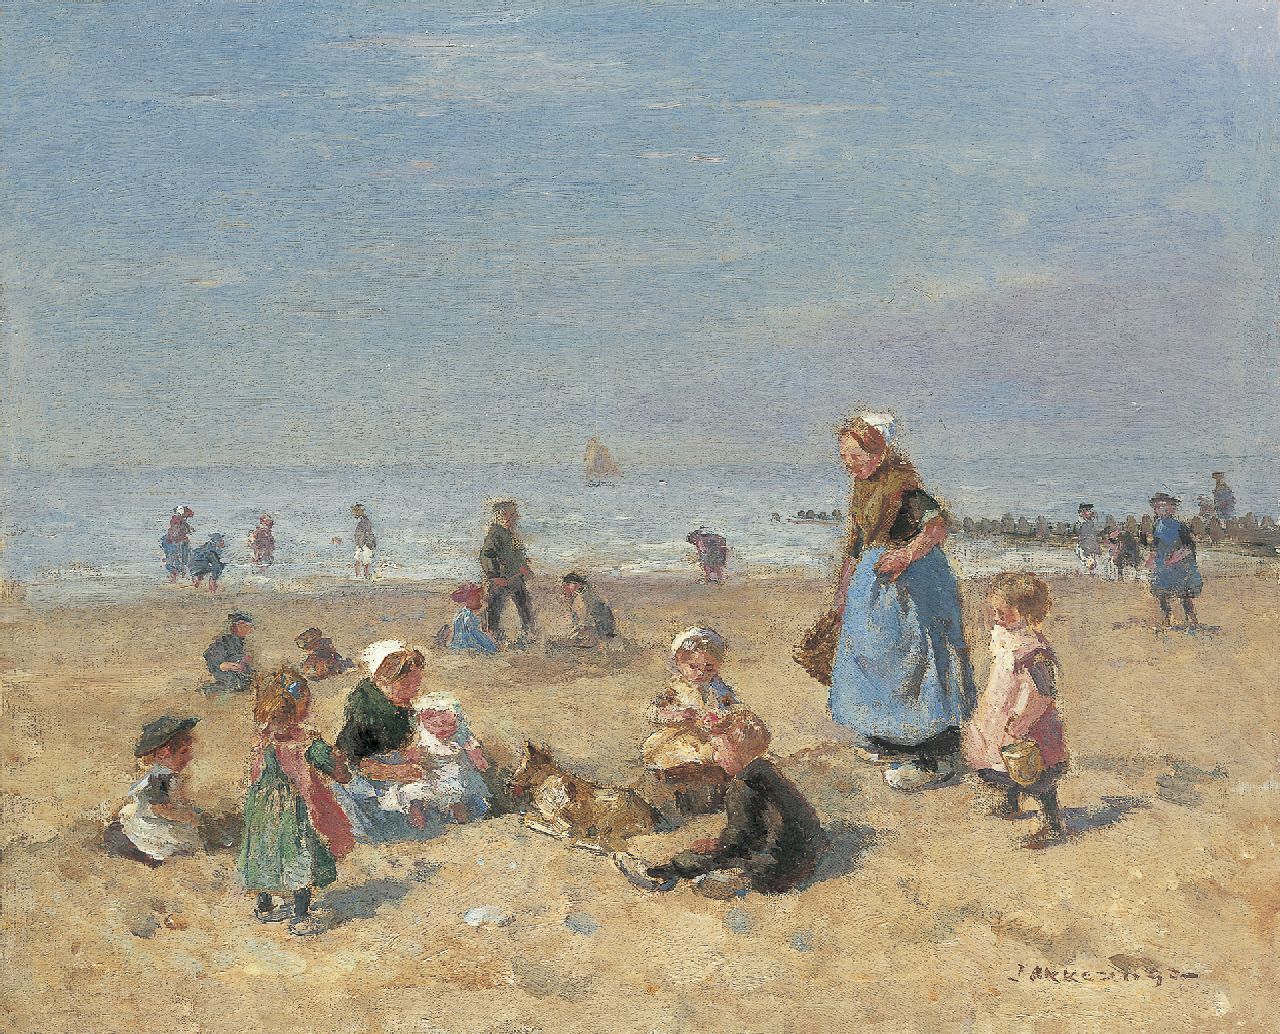 Akkeringa J.E.H.  | 'Johannes Evert' Hendrik Akkeringa, Spelende kinderen op het strand, olieverf op doek 29,2 x 36,1 cm, gesigneerd rechtsonder